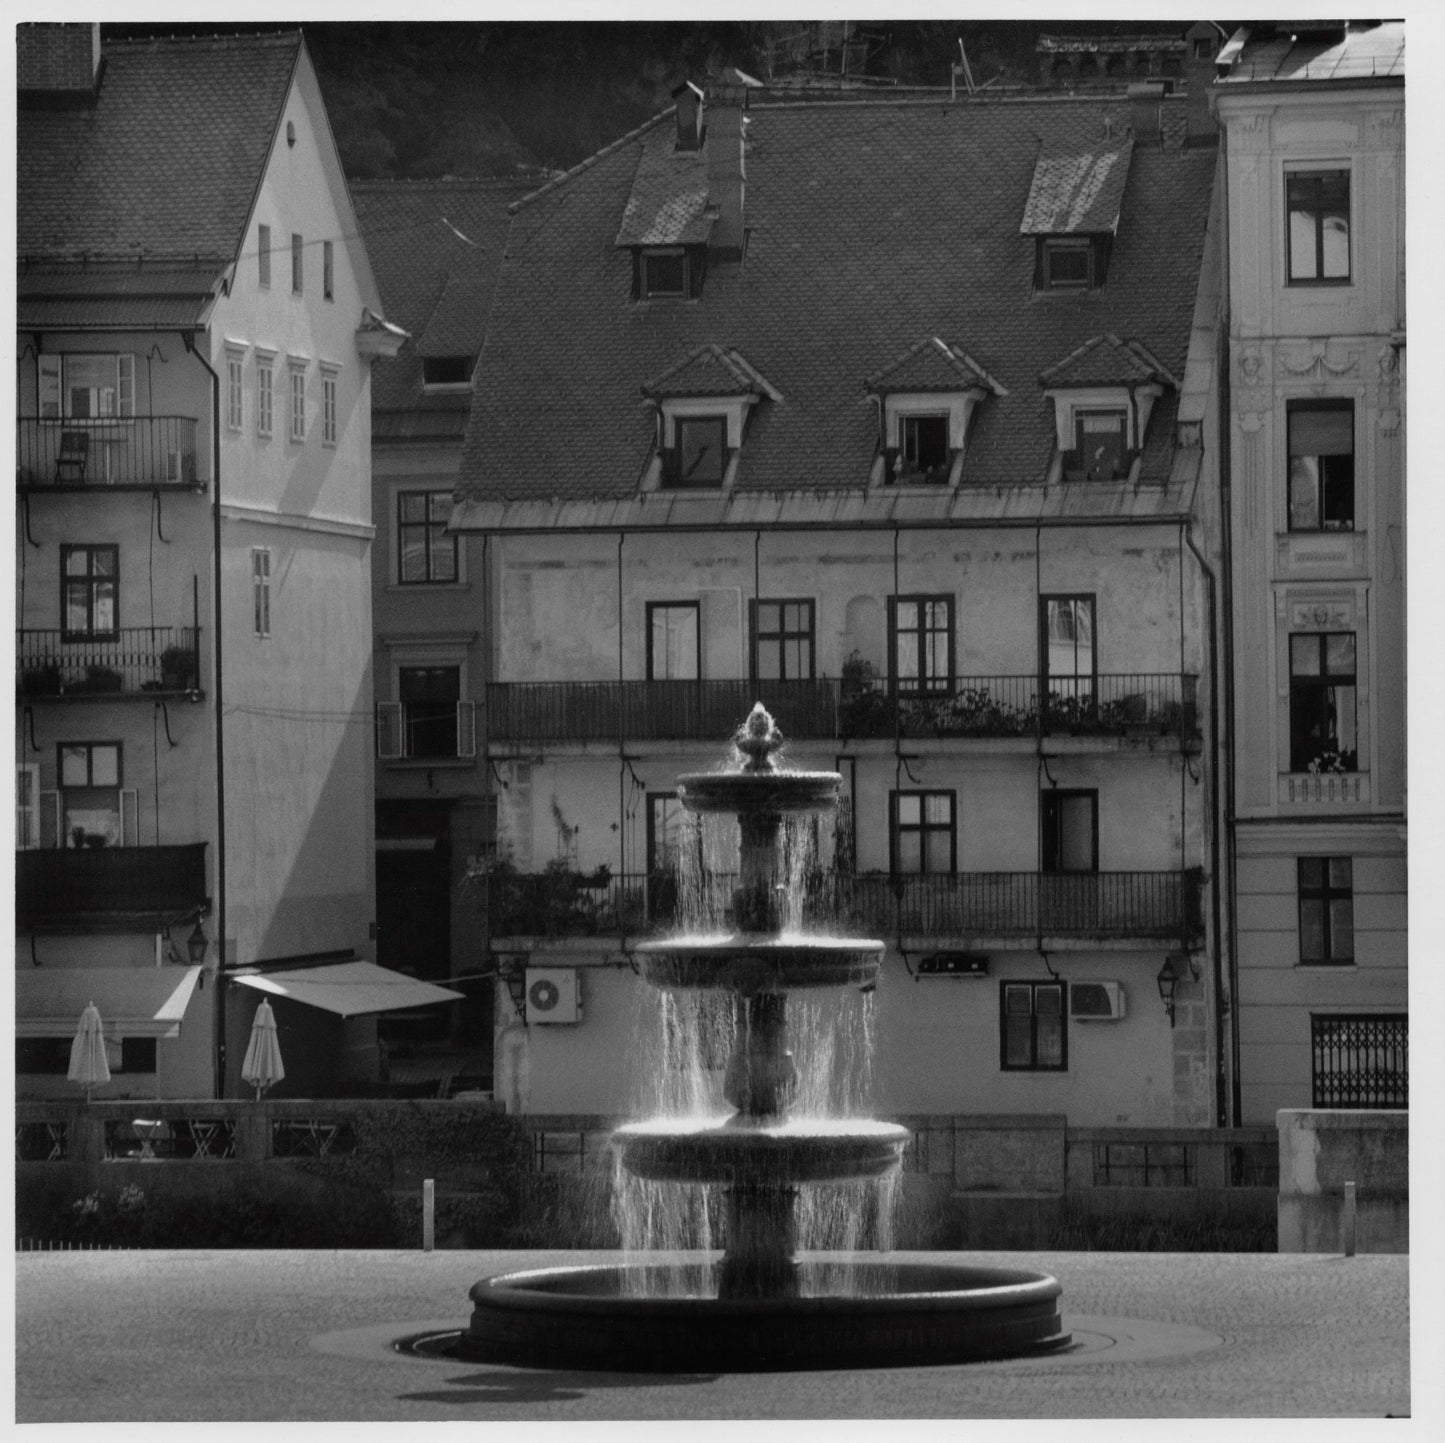 TIHOMIR PINTER - Ljubljana, Fountain, 2014